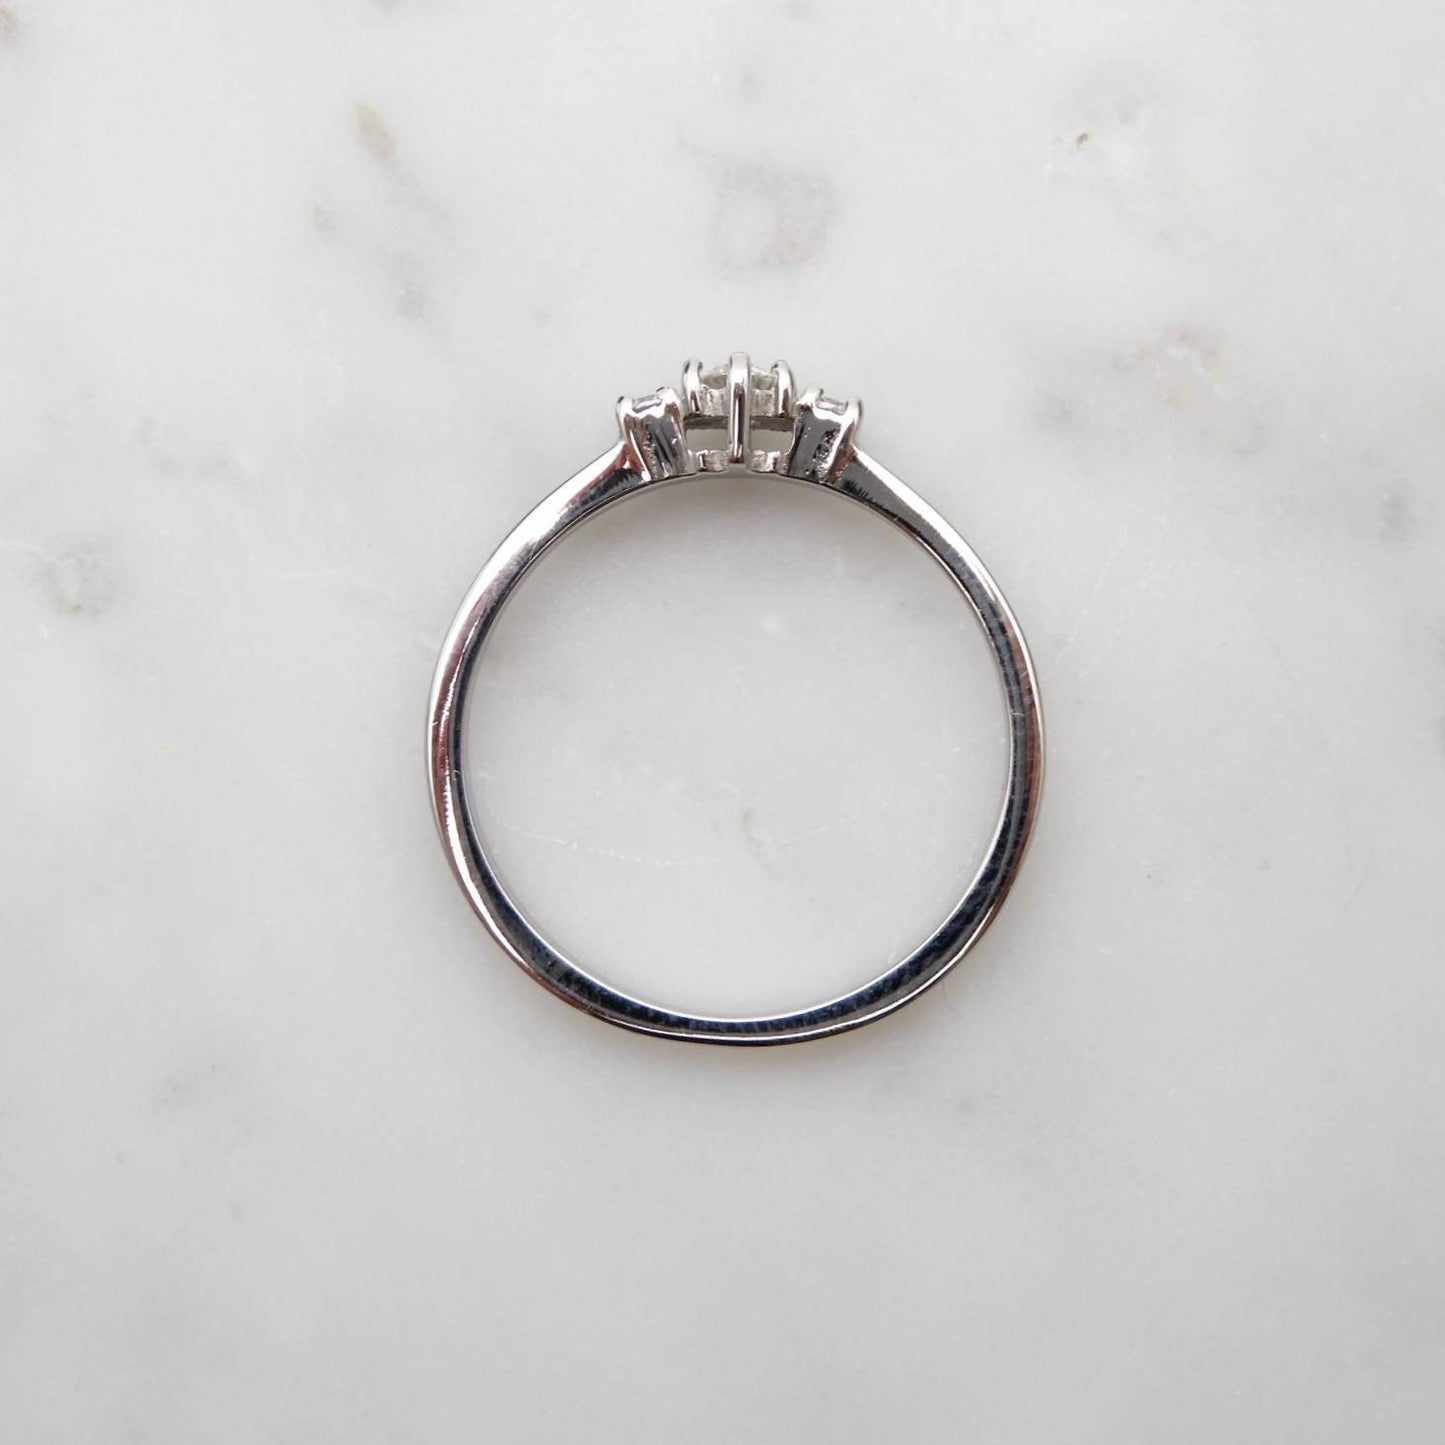 Genuine moissanite 3 stone Trilogy Ring in White Gold or Titanium  - engagement ring - handmade ring